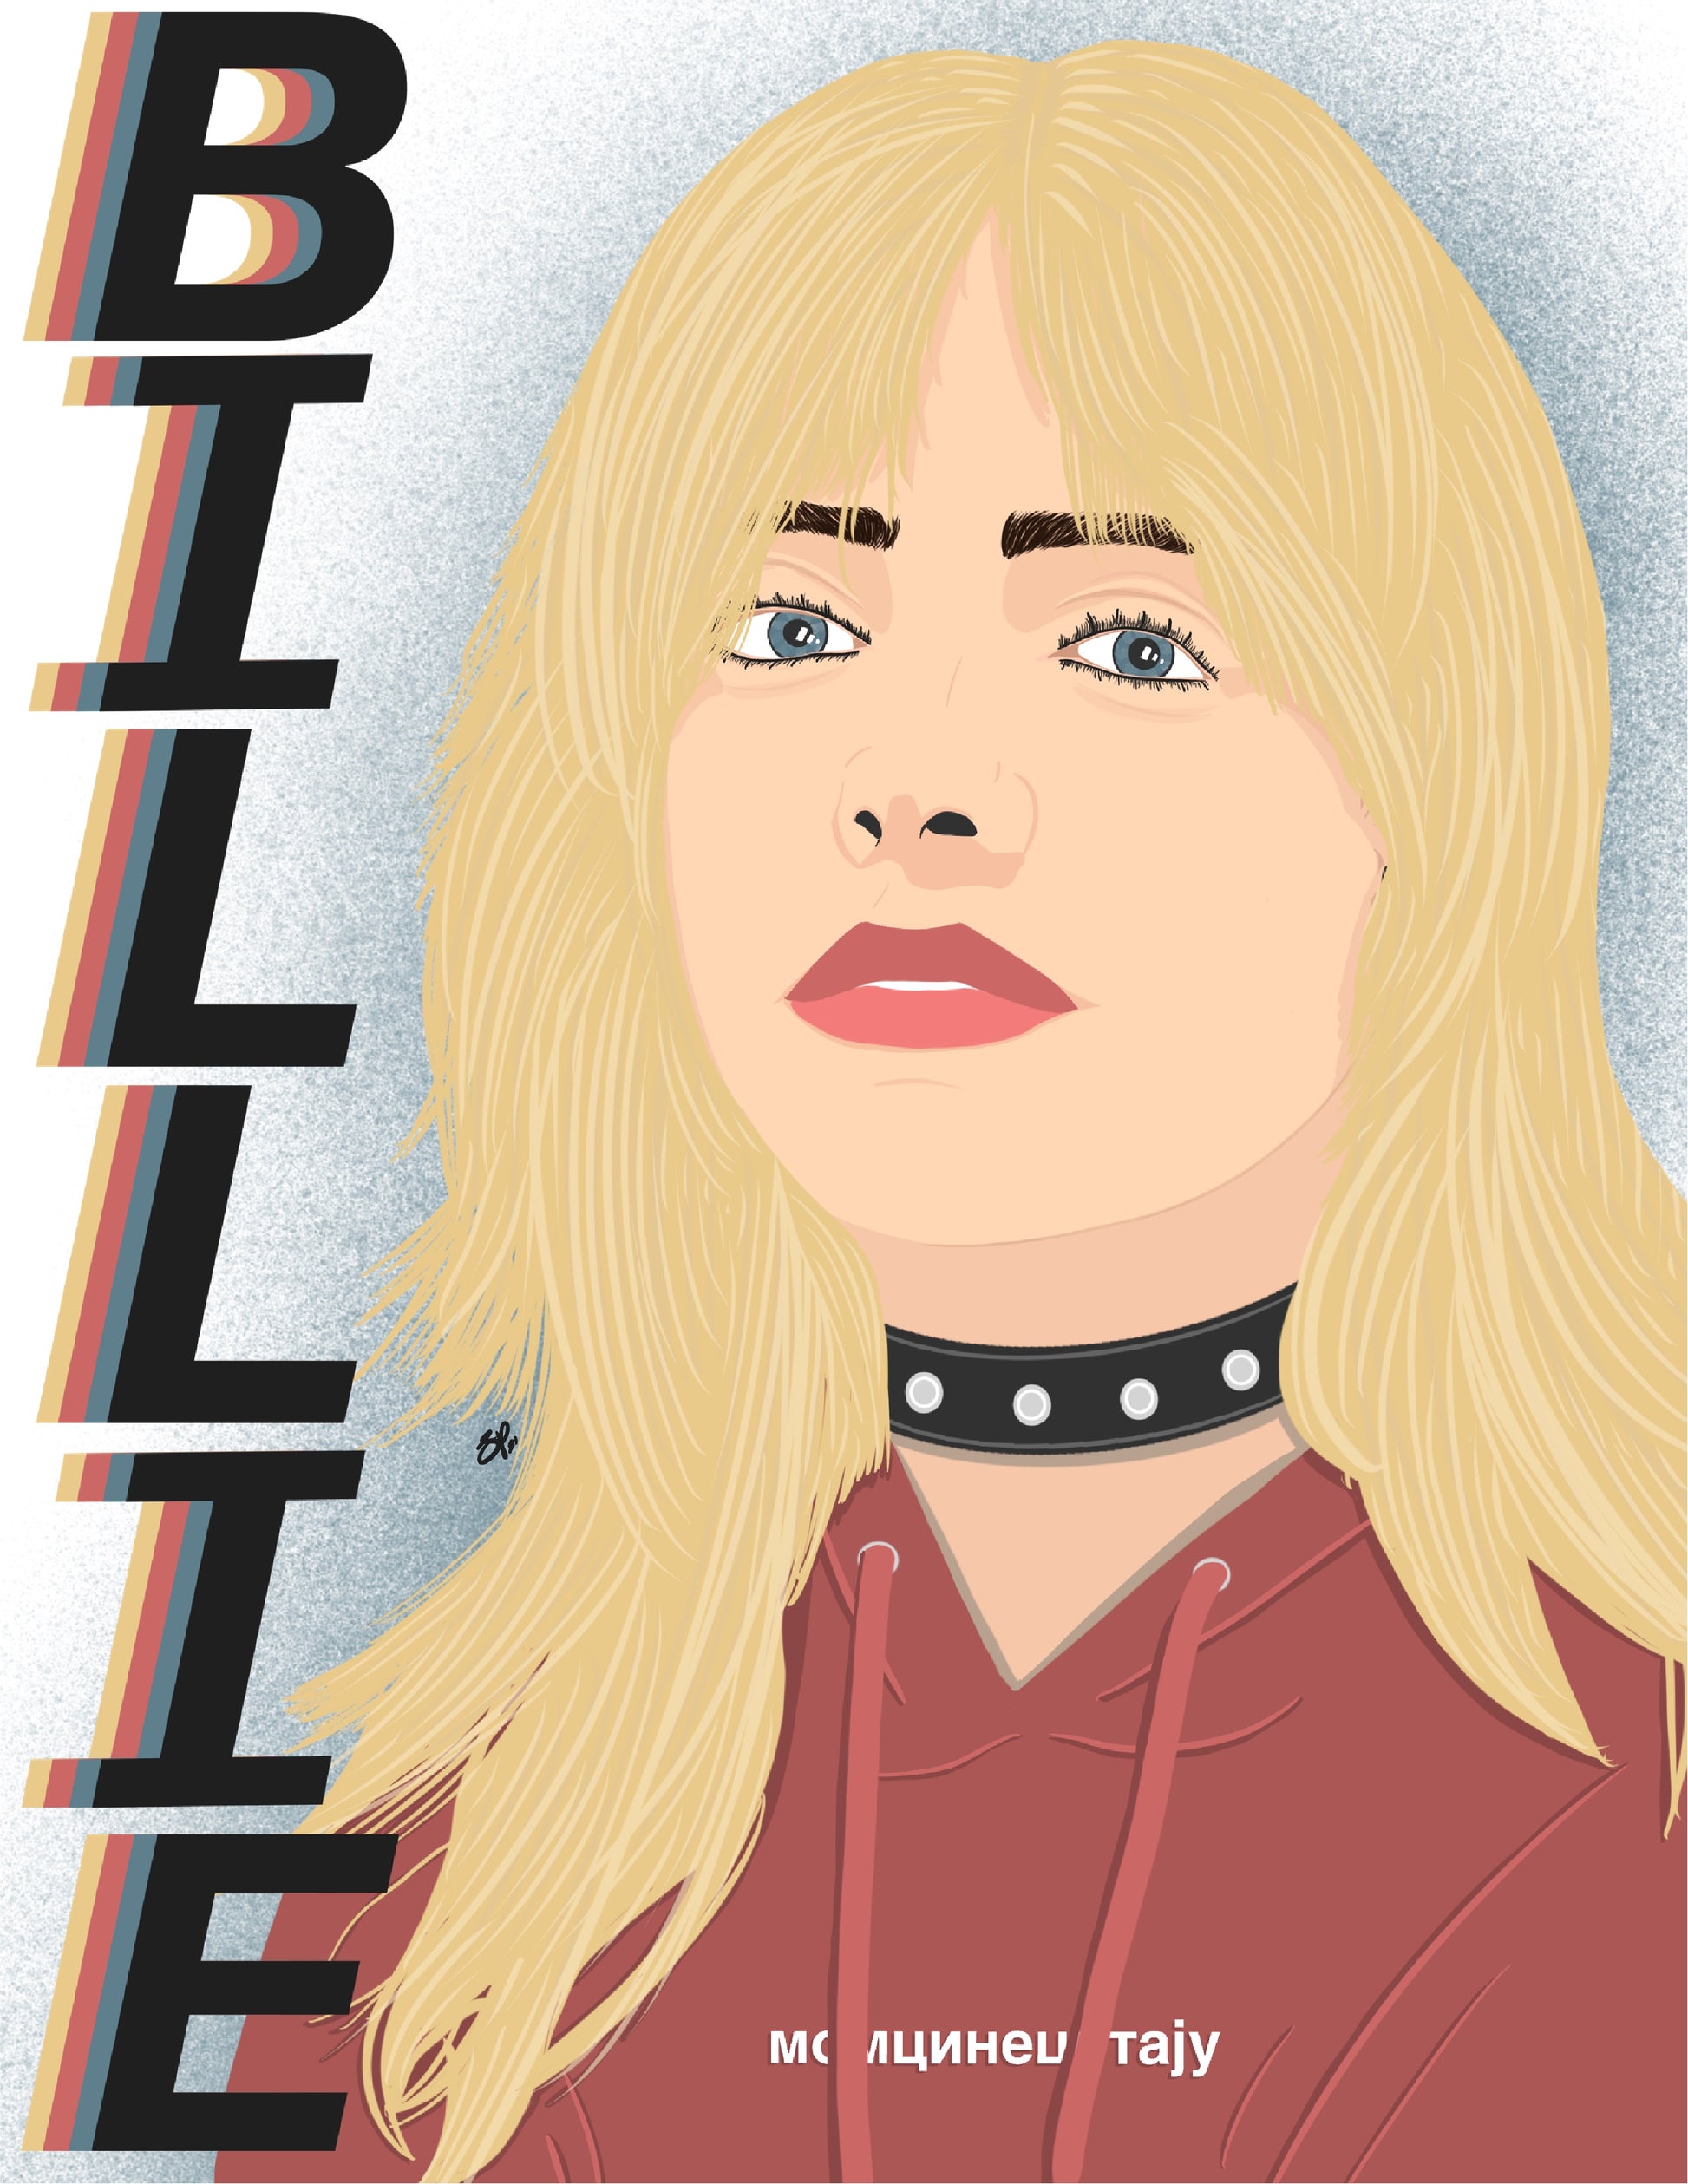 BILLIE EILISH - BLONDE BILLIE - Limited Poster by BOYSDONTDRAW 